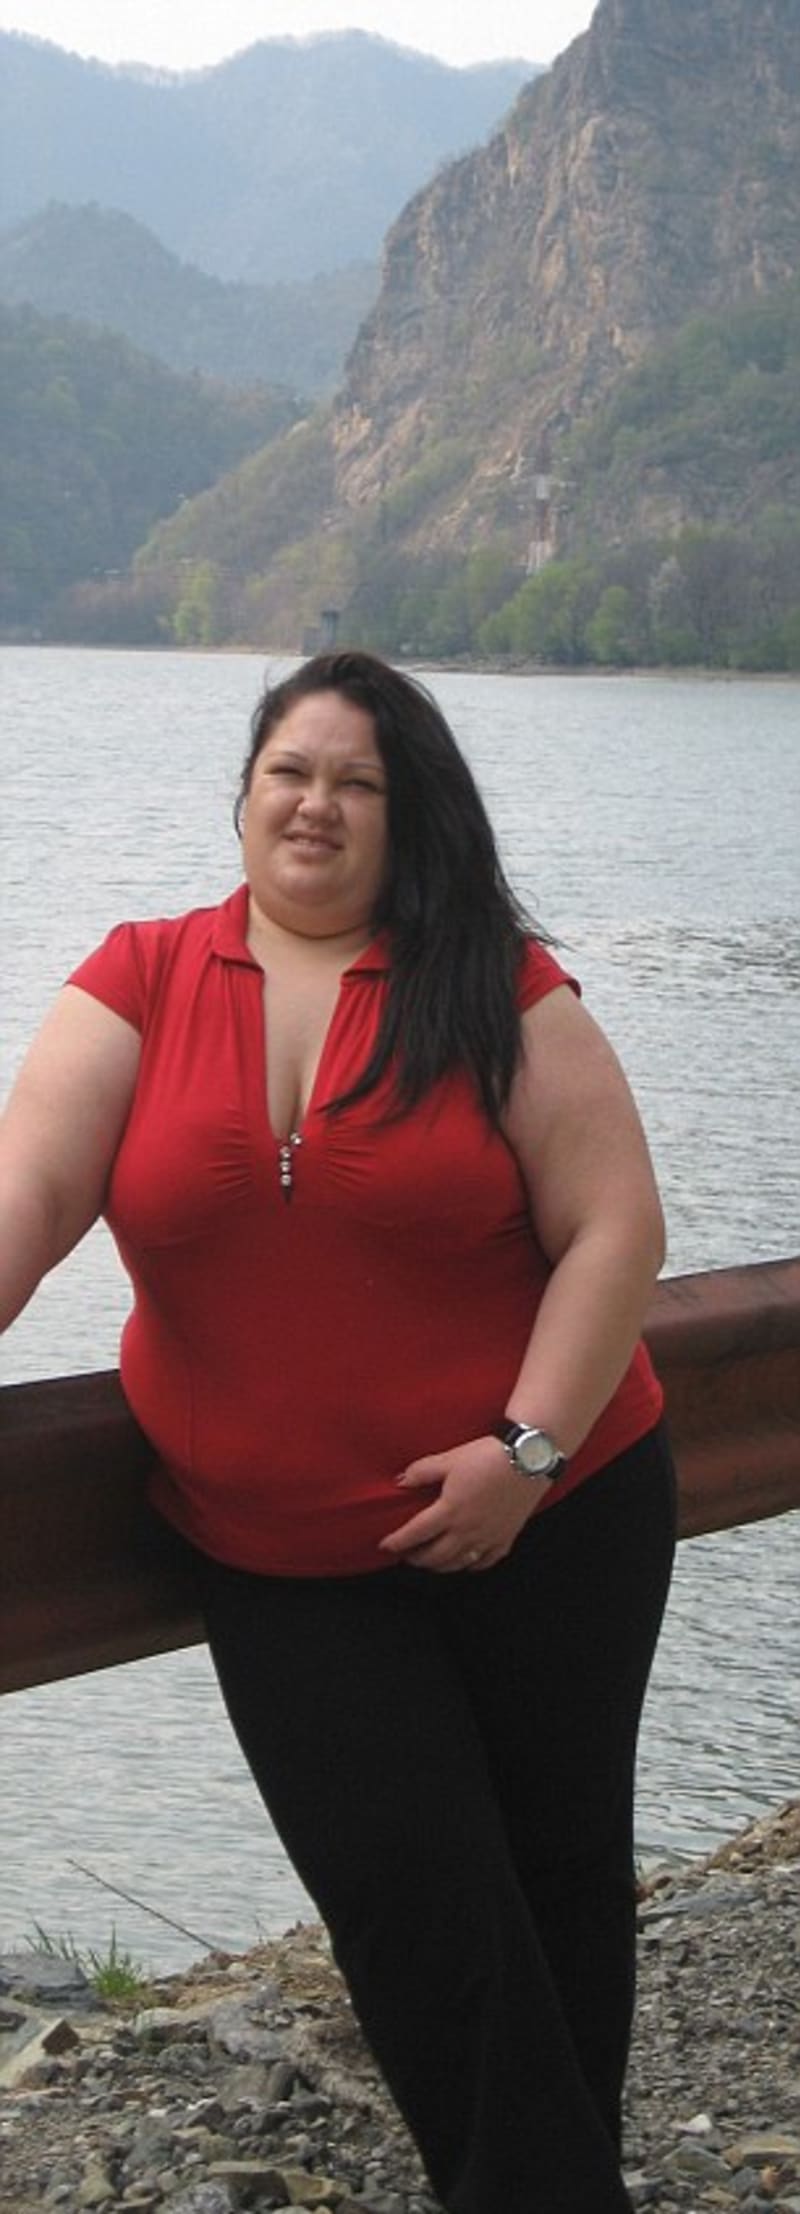 Ana zhubla za jeden rok 115 kg! - Obrázek 3